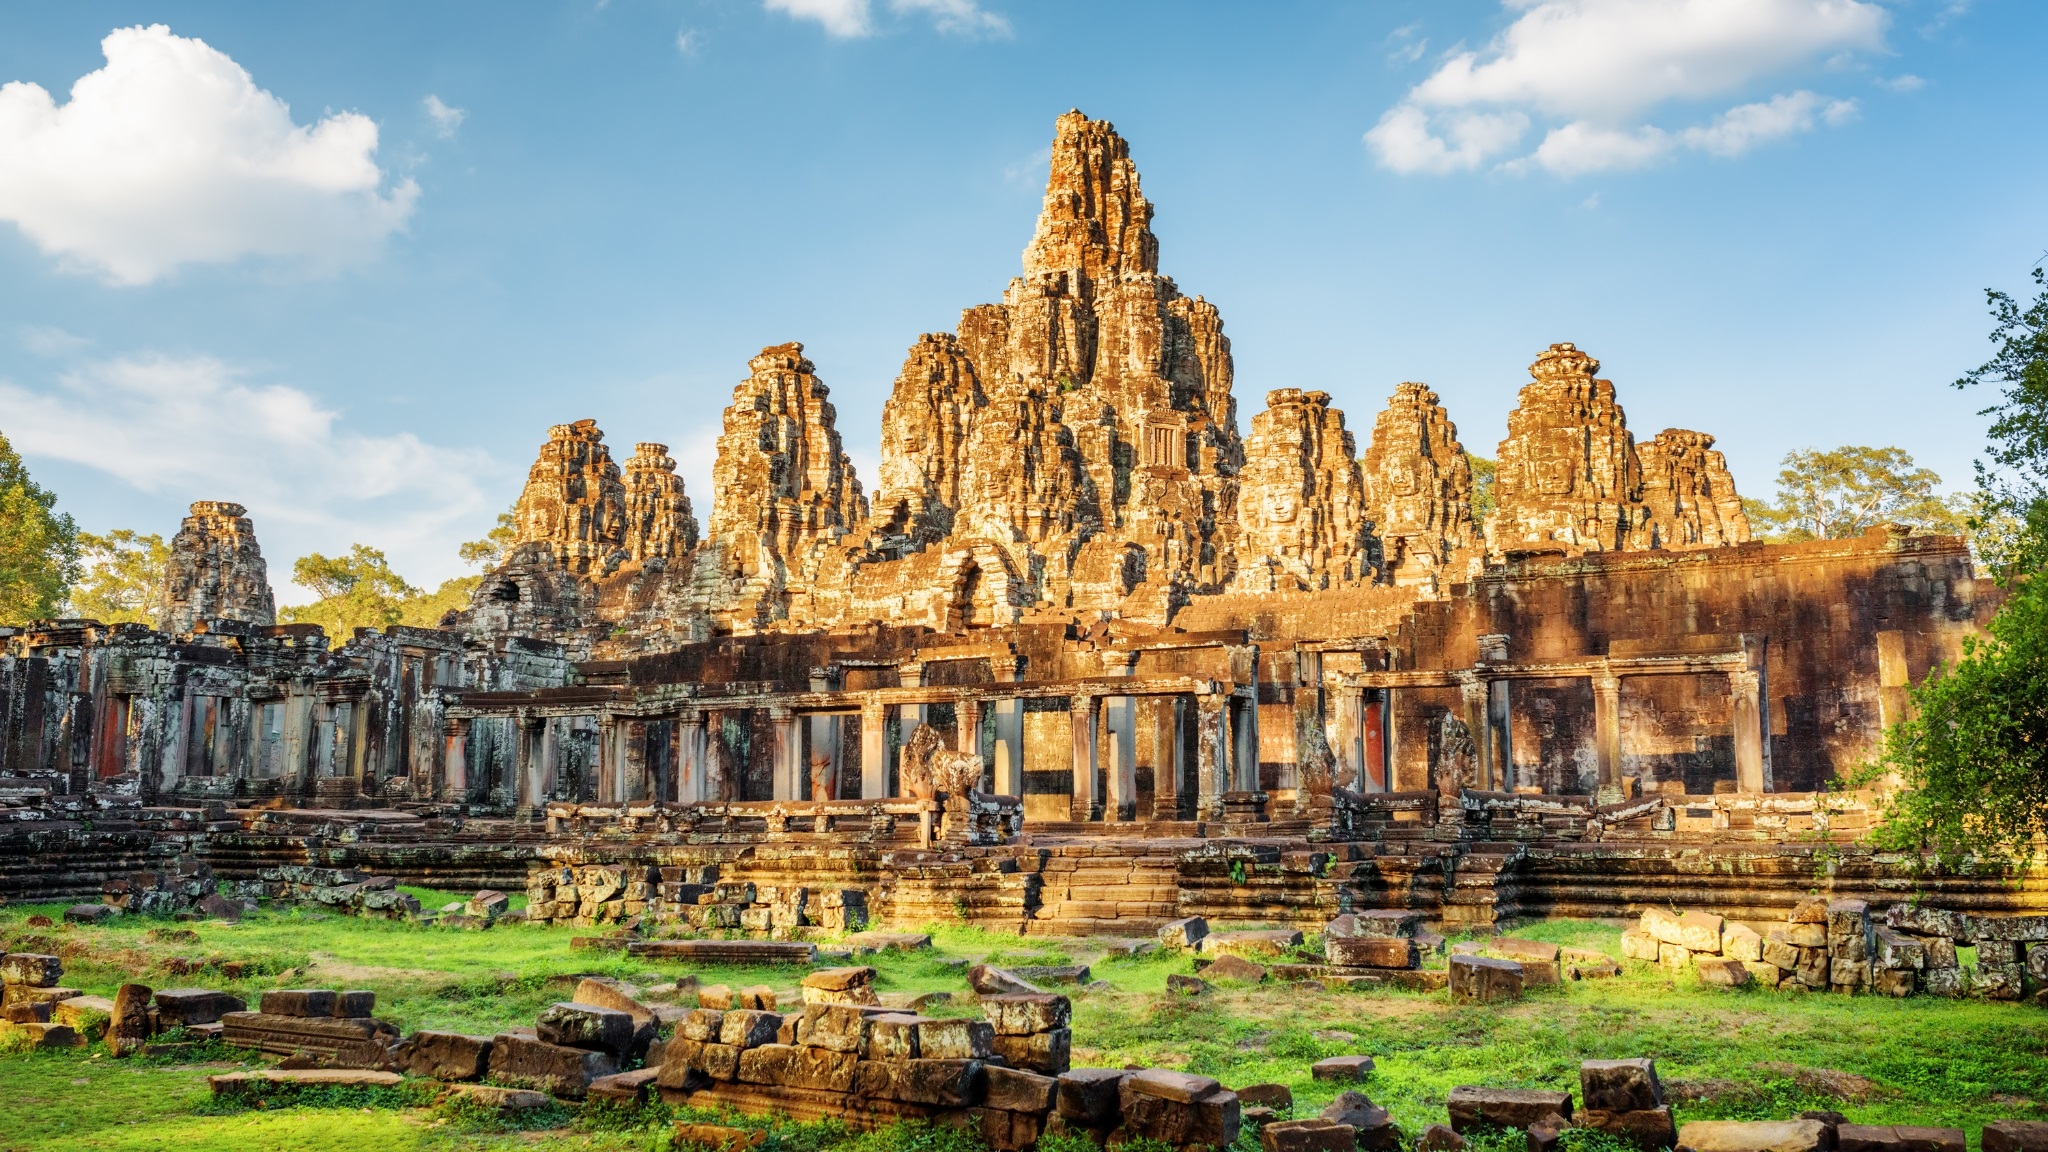 Angkor Wat (Cambodia) In The Dry Season